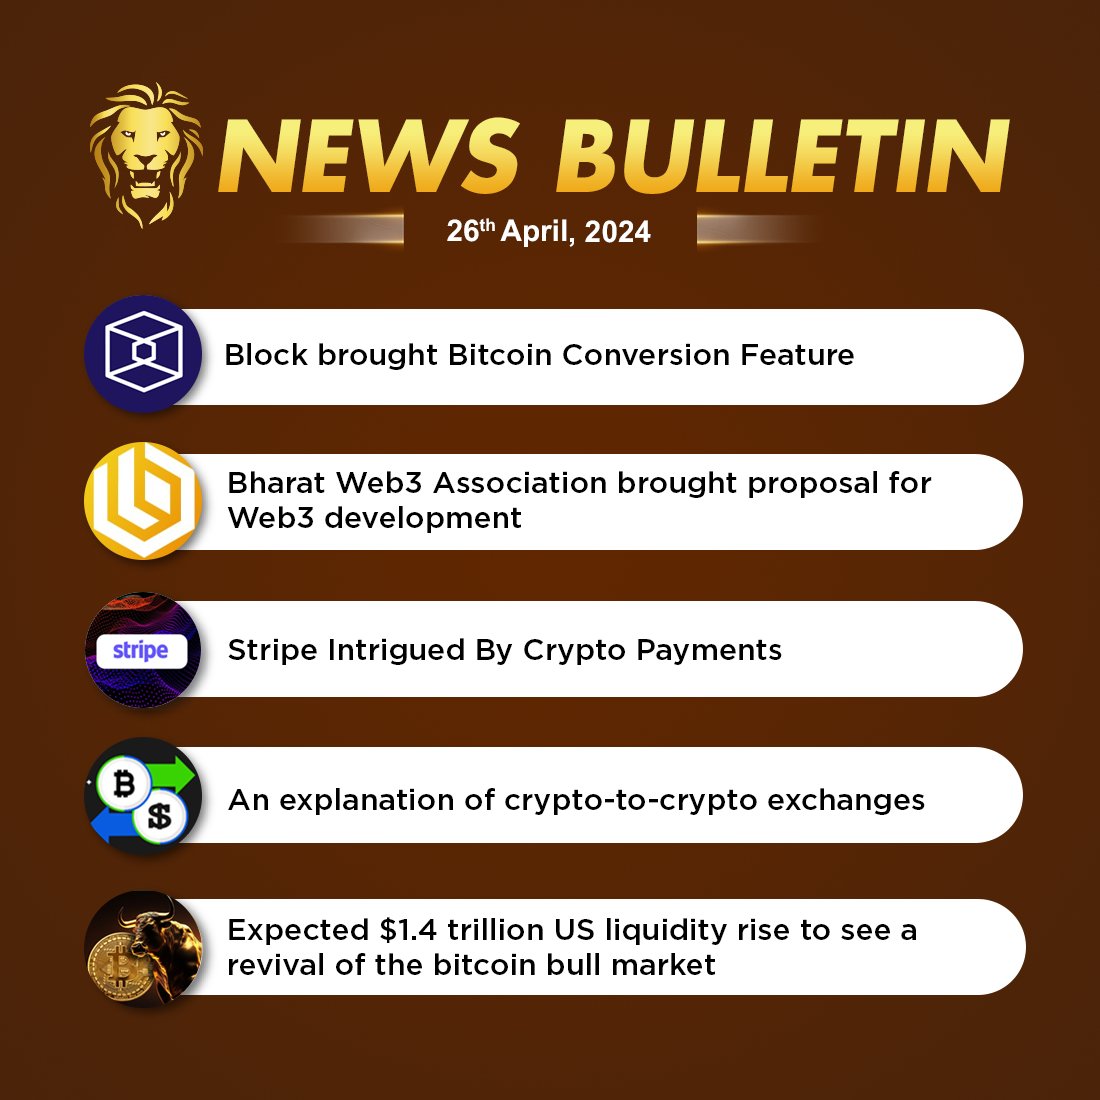 #CoinGabbar Latest News Bulletin: April 26th, 2024 Read More News: coingabbar.com/en/crypto-news… #CryptoNews #Web3 #Bitcoin #cryptoexchange #bitcoinbullmarket #CryptoPayments #Foreignexchanges #Stripe #cryptocurrency #cryptonews #cryptonewstoday